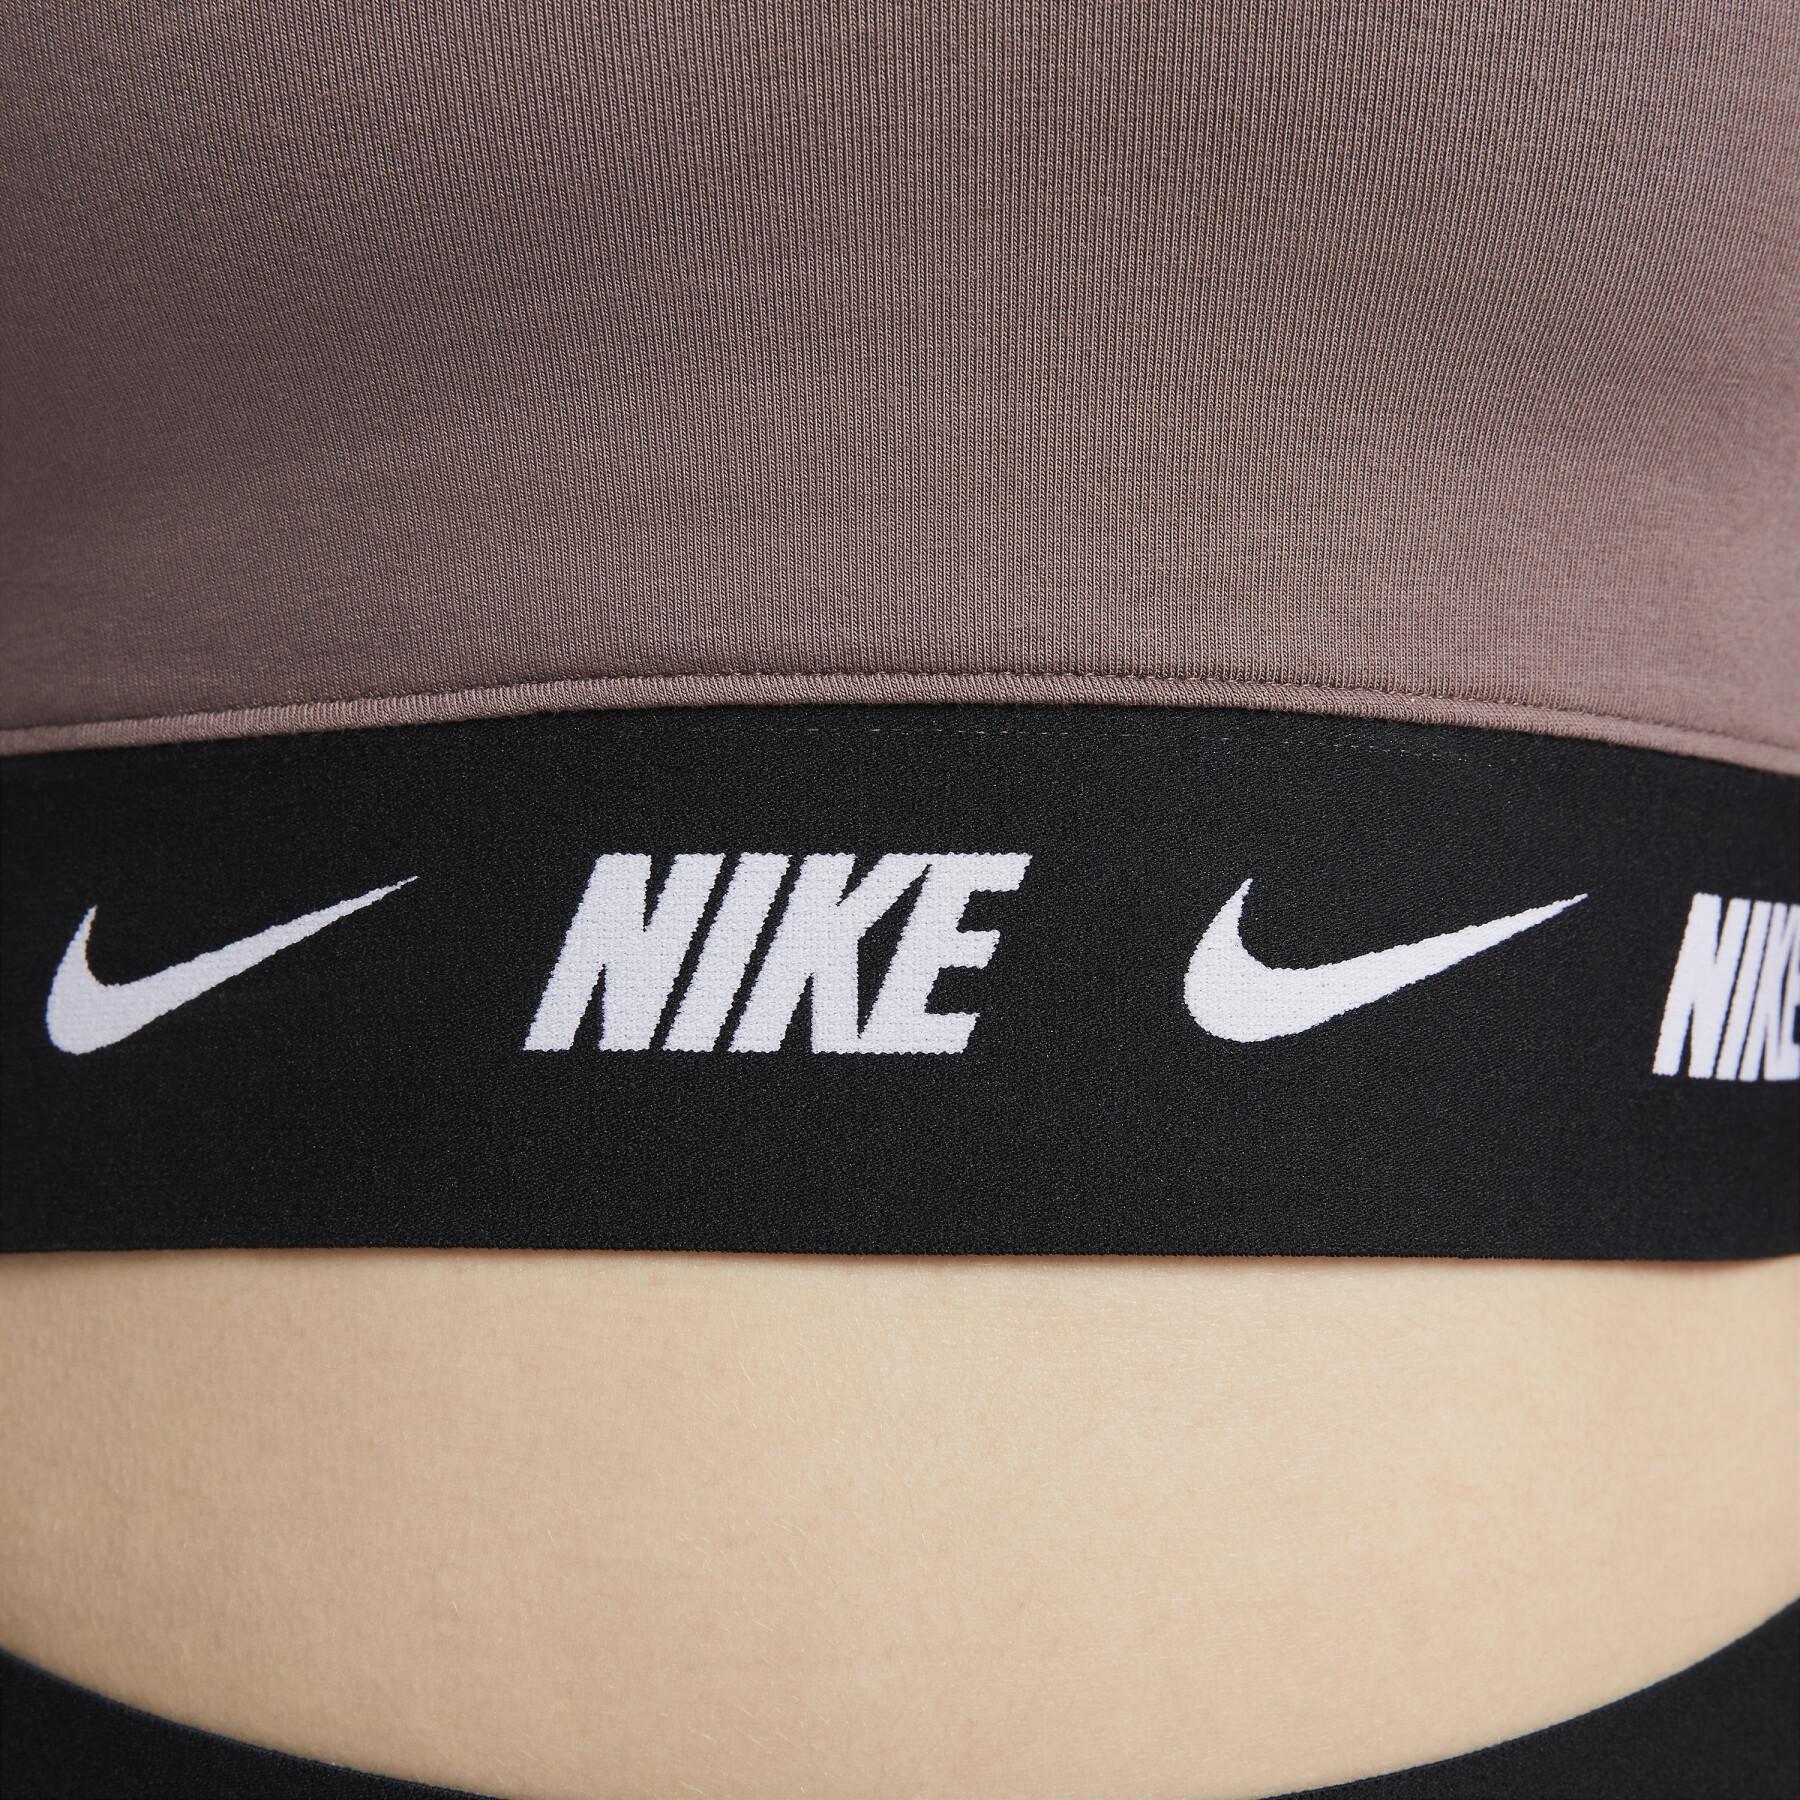 Women's long sleeve crop top Nike Tape